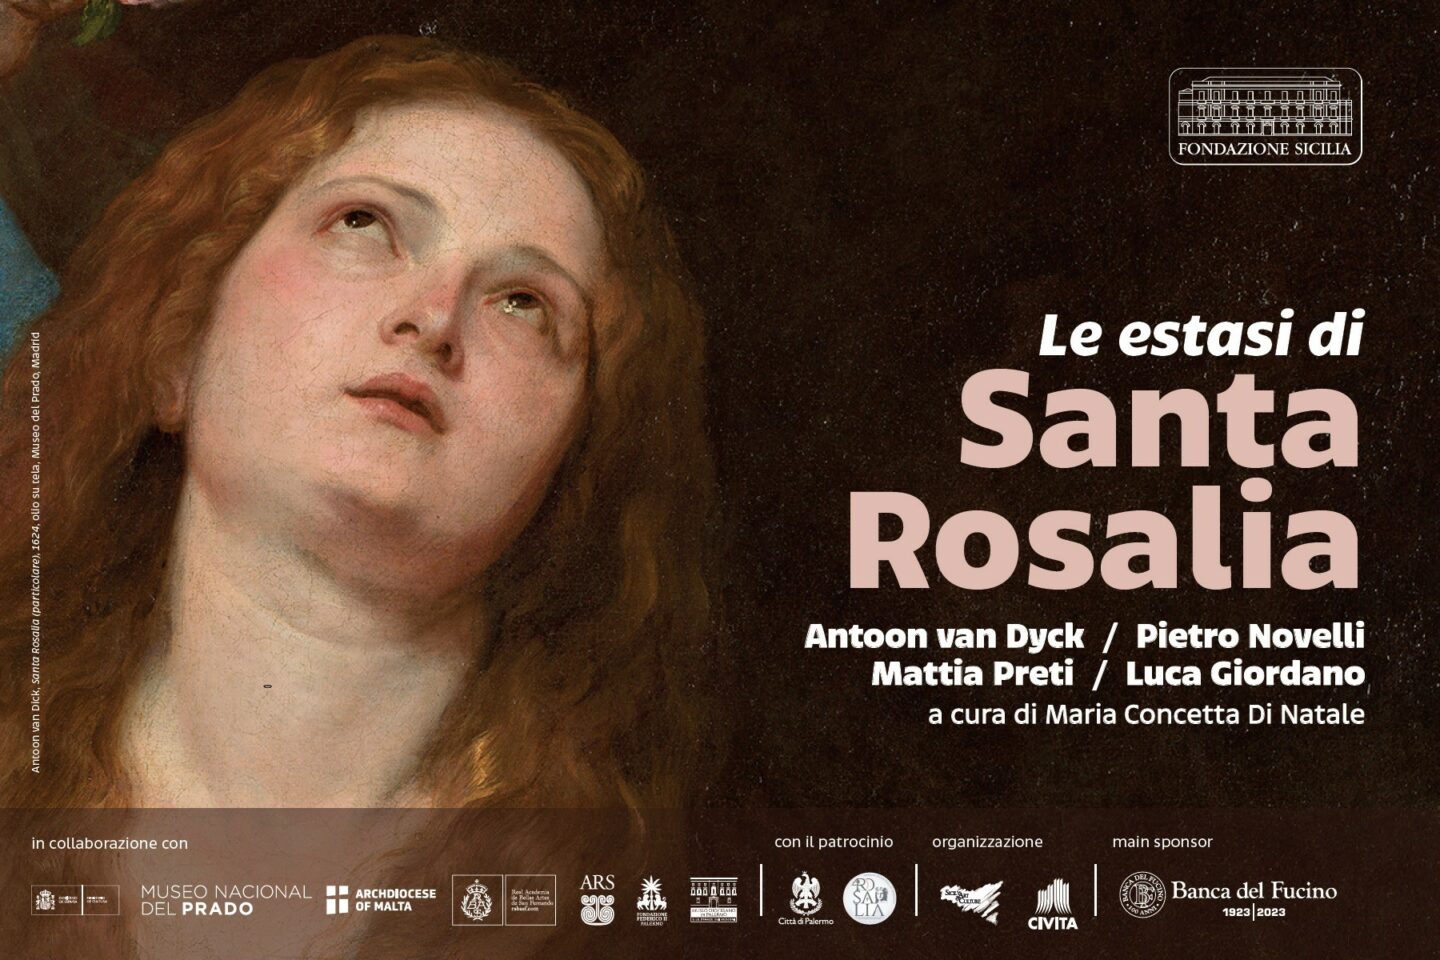 Le estasi di Santa Rosalia – Antoon van Dyck, Pietro Novelli, Mattia Preti, Luca Giordano